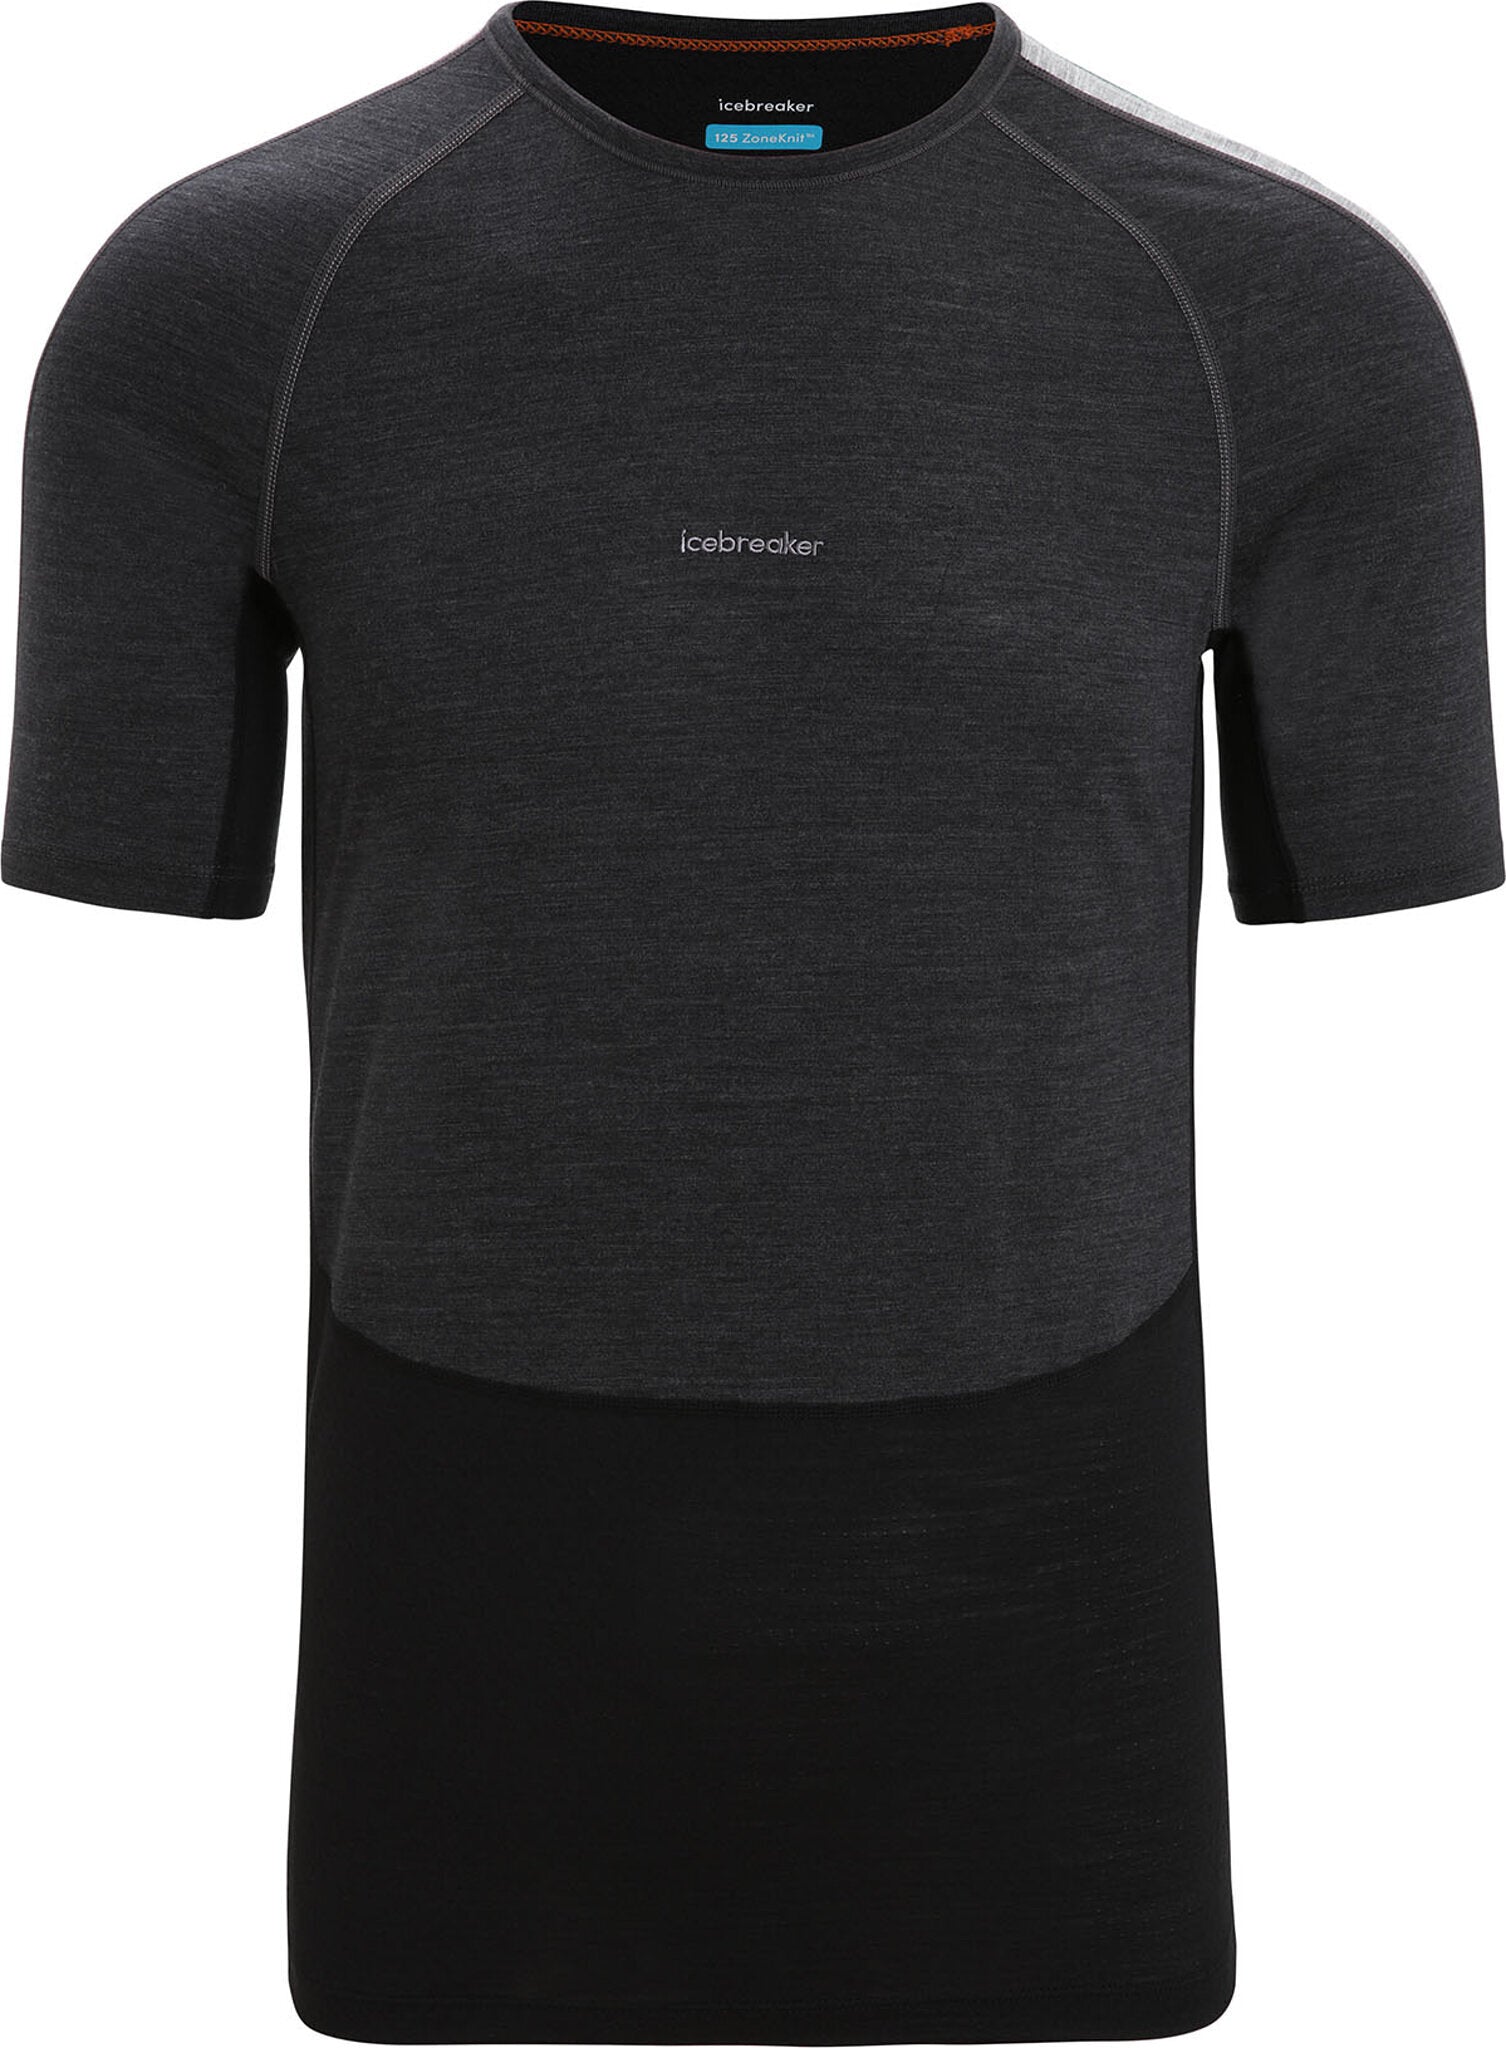 Icebreaker Zoneknit L/S Tee - Sport shirt Men's